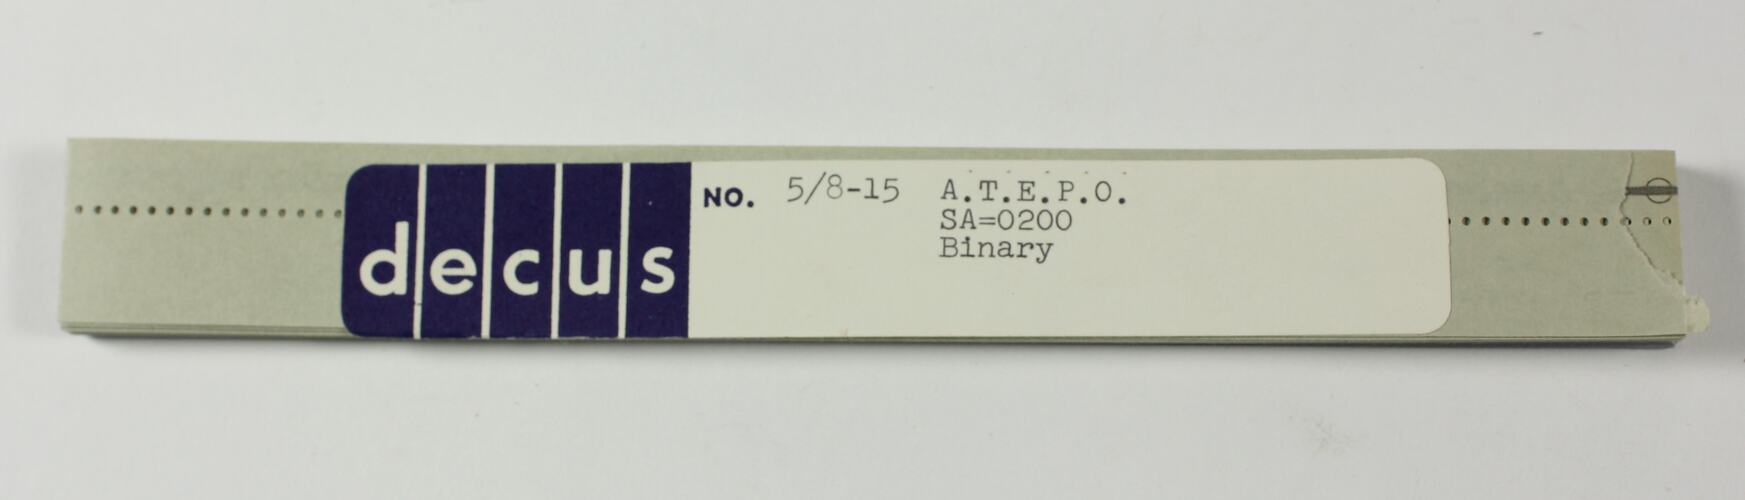 Paper Tape - DECUS, '5/8-15 A.T.E.P.O SA=0200, Binary'